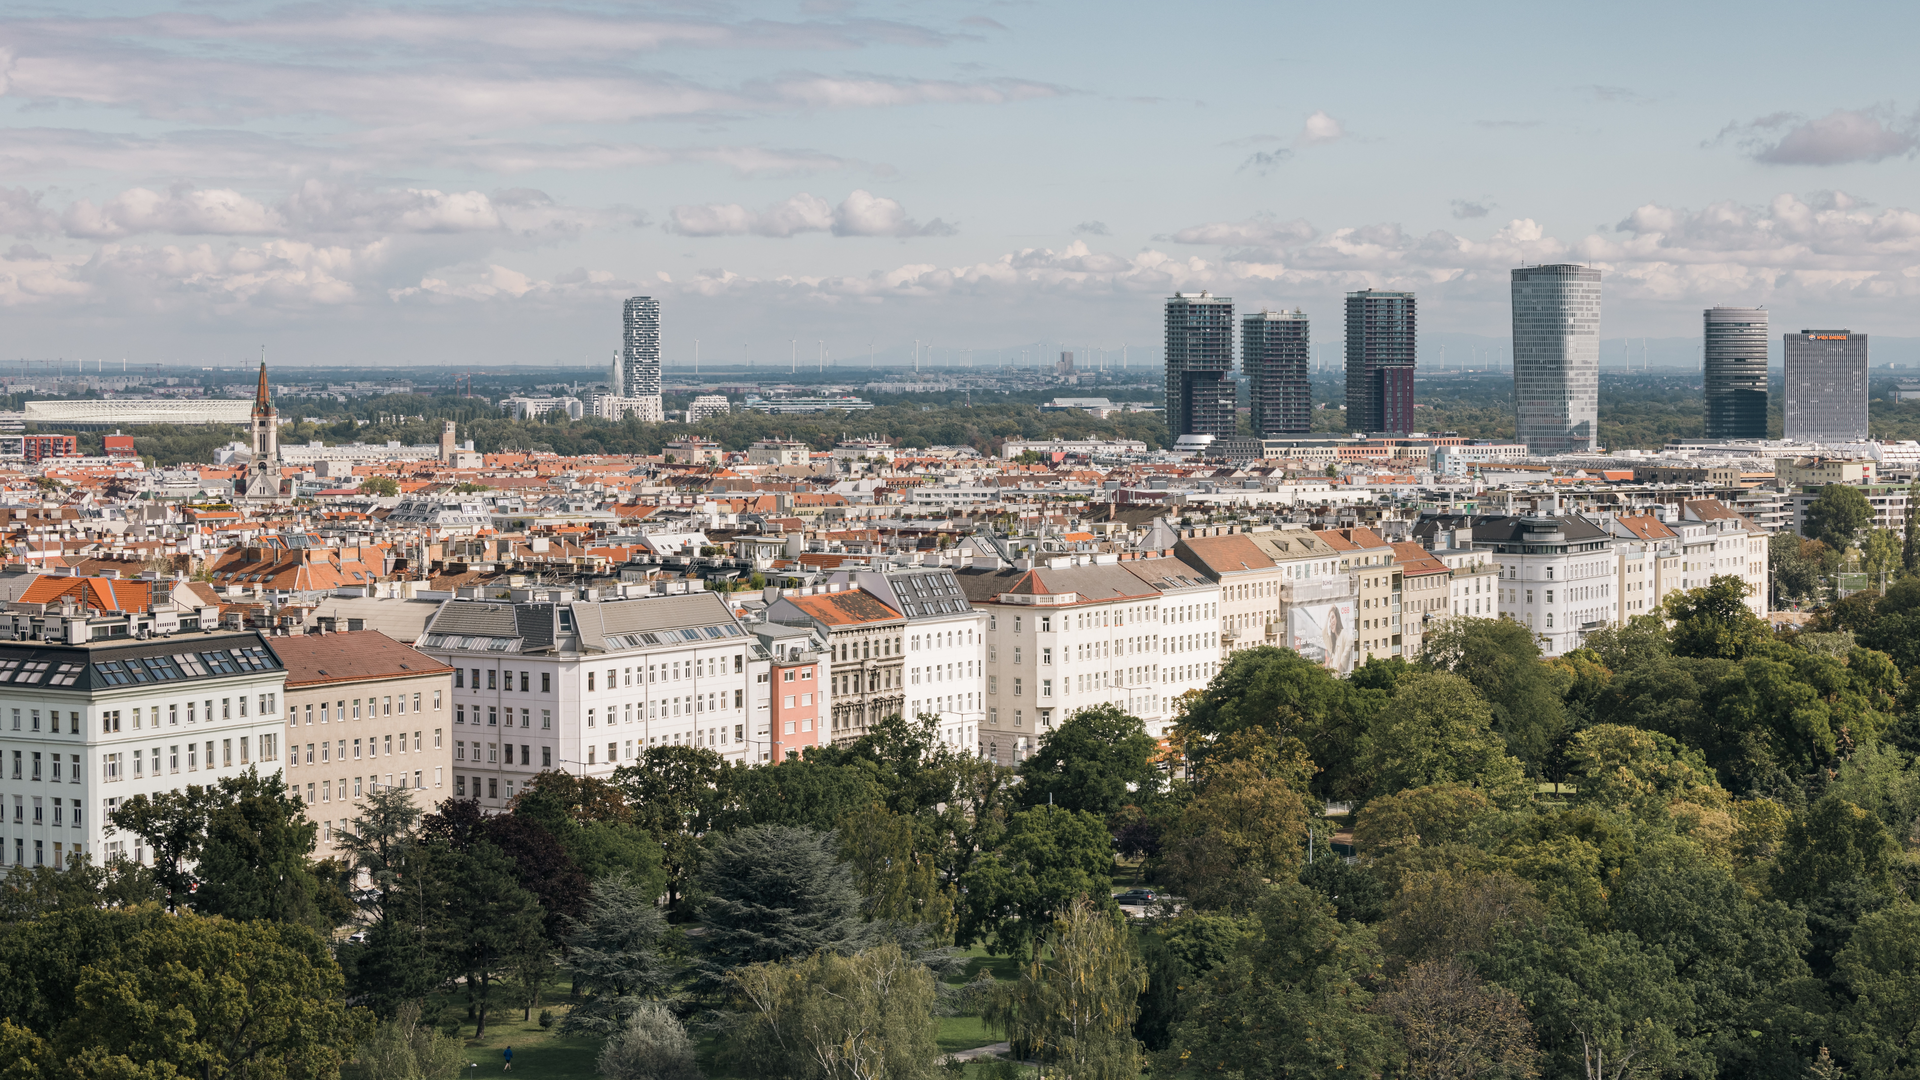 GTI - Makler für Immobilien in Wien